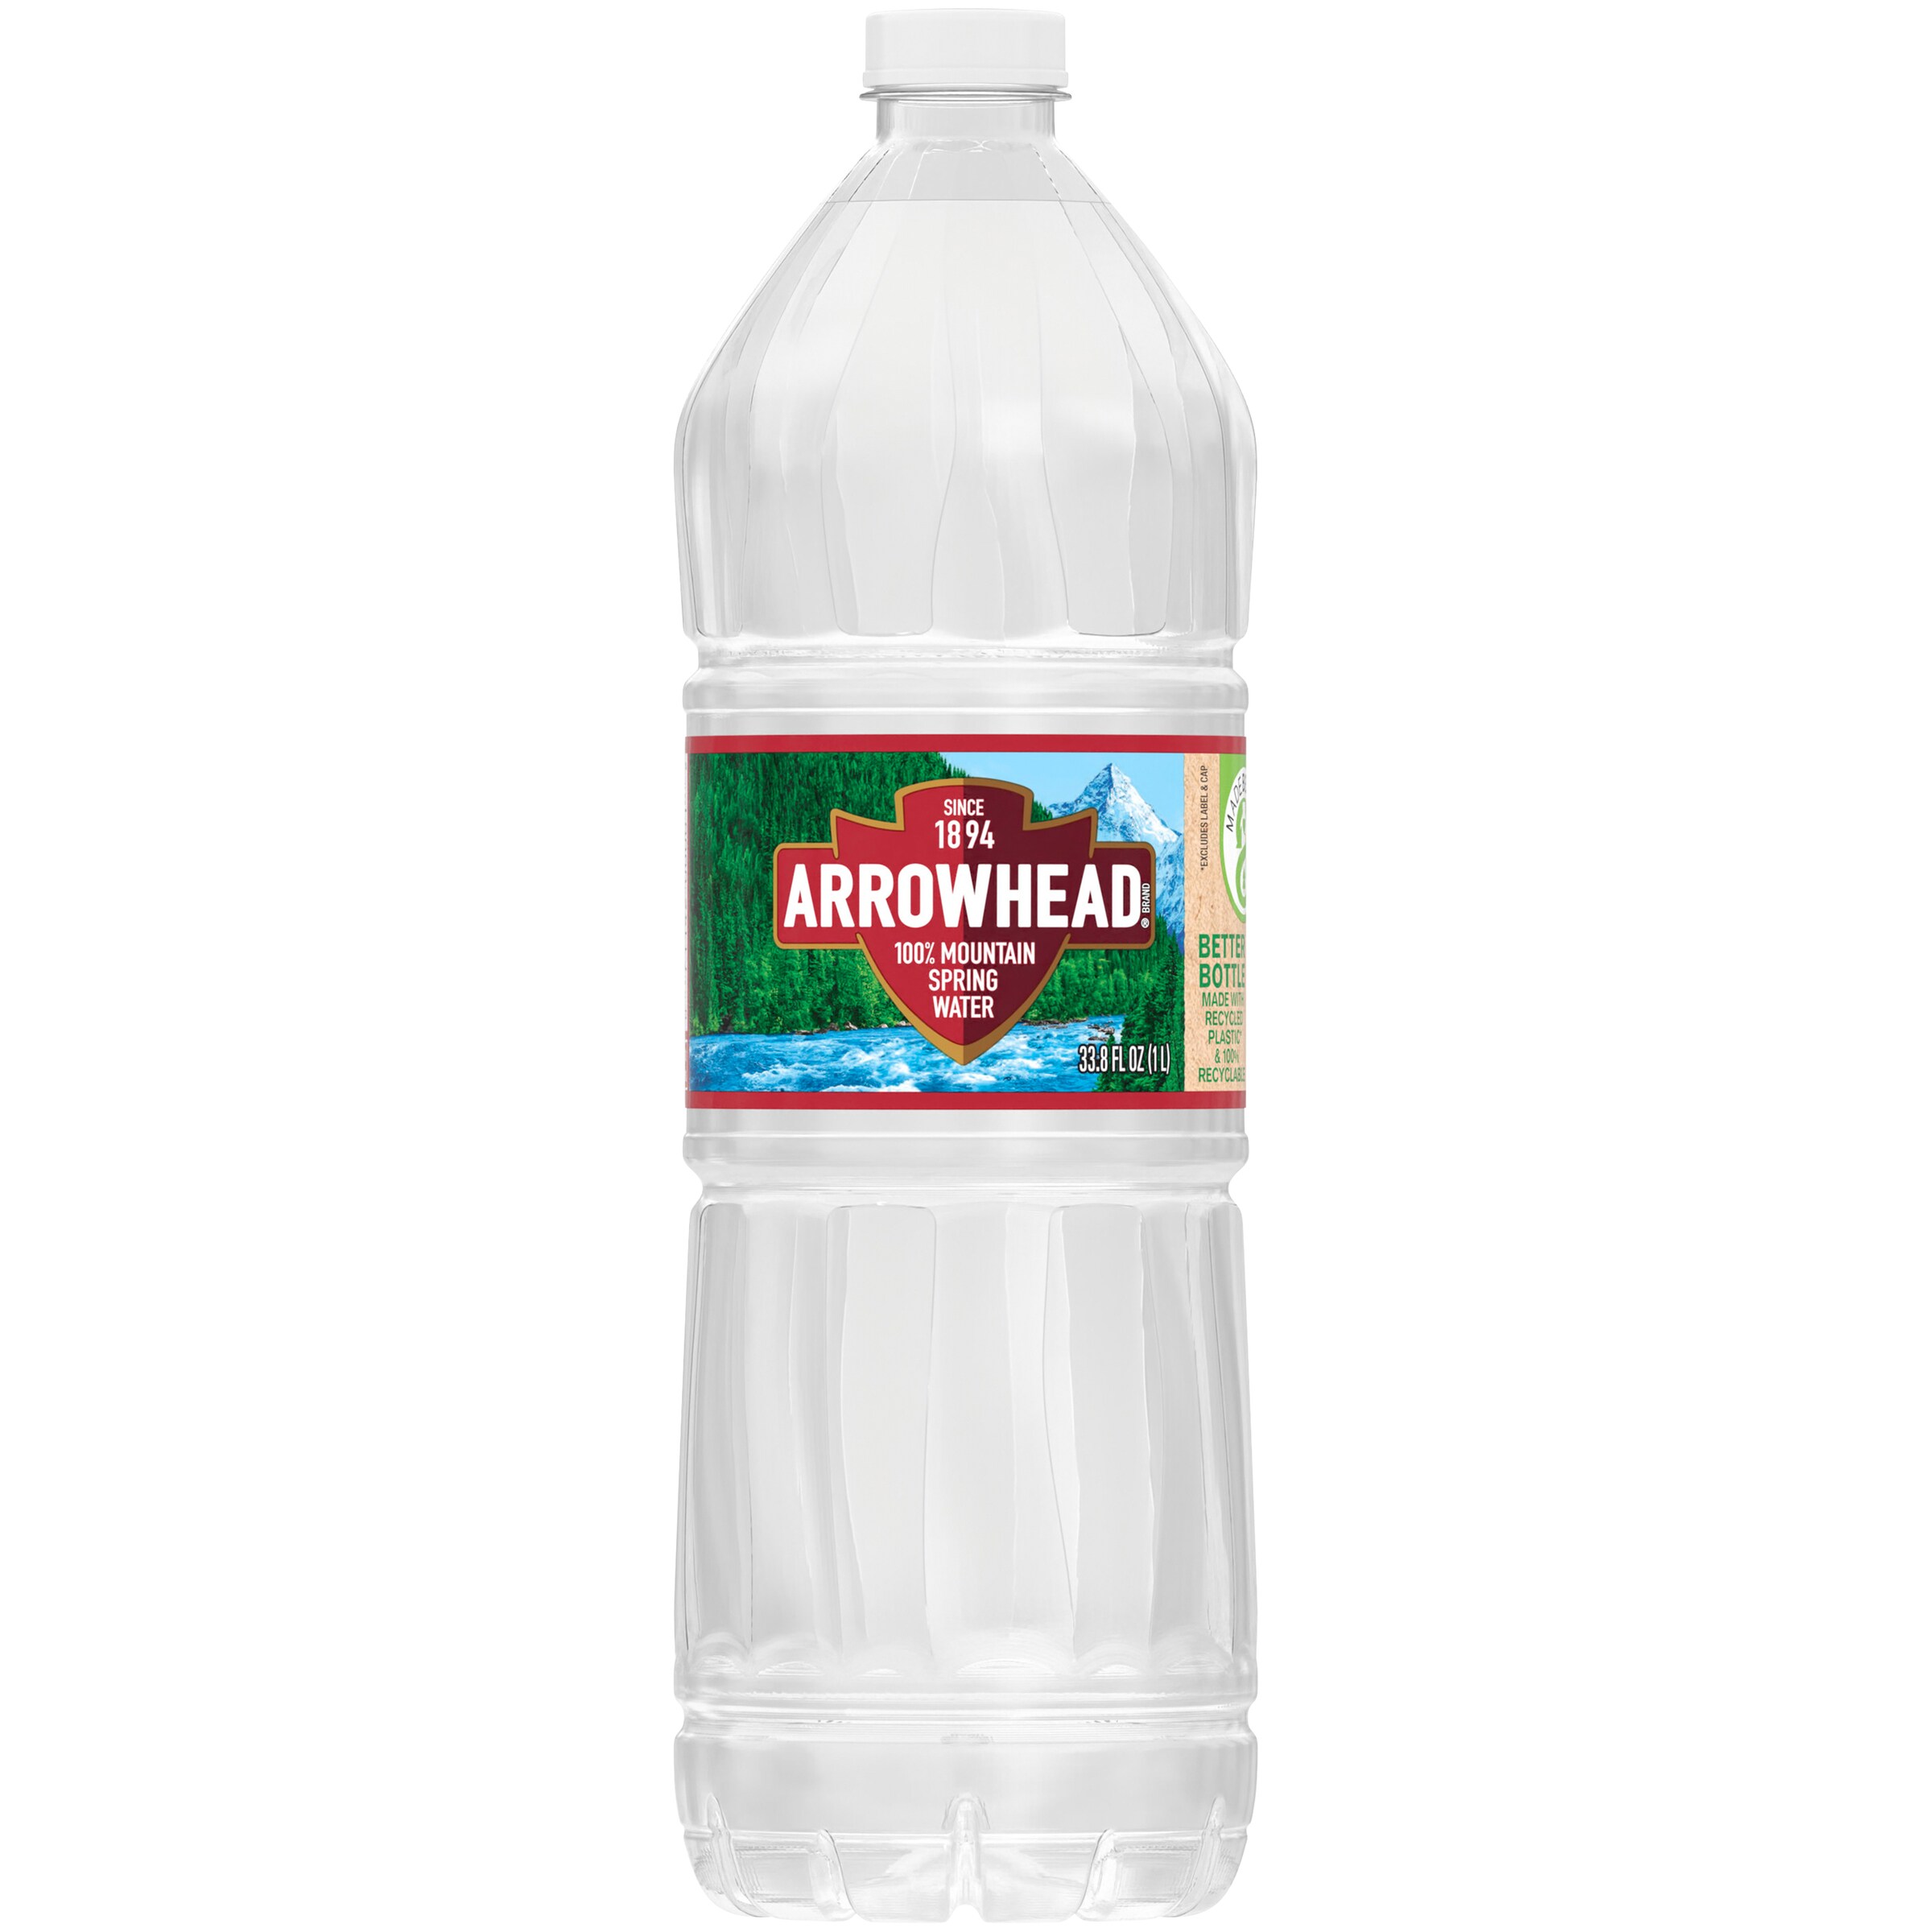 Arrowhead 15-Pack 33.8-fl oz Spring Bottled Water at